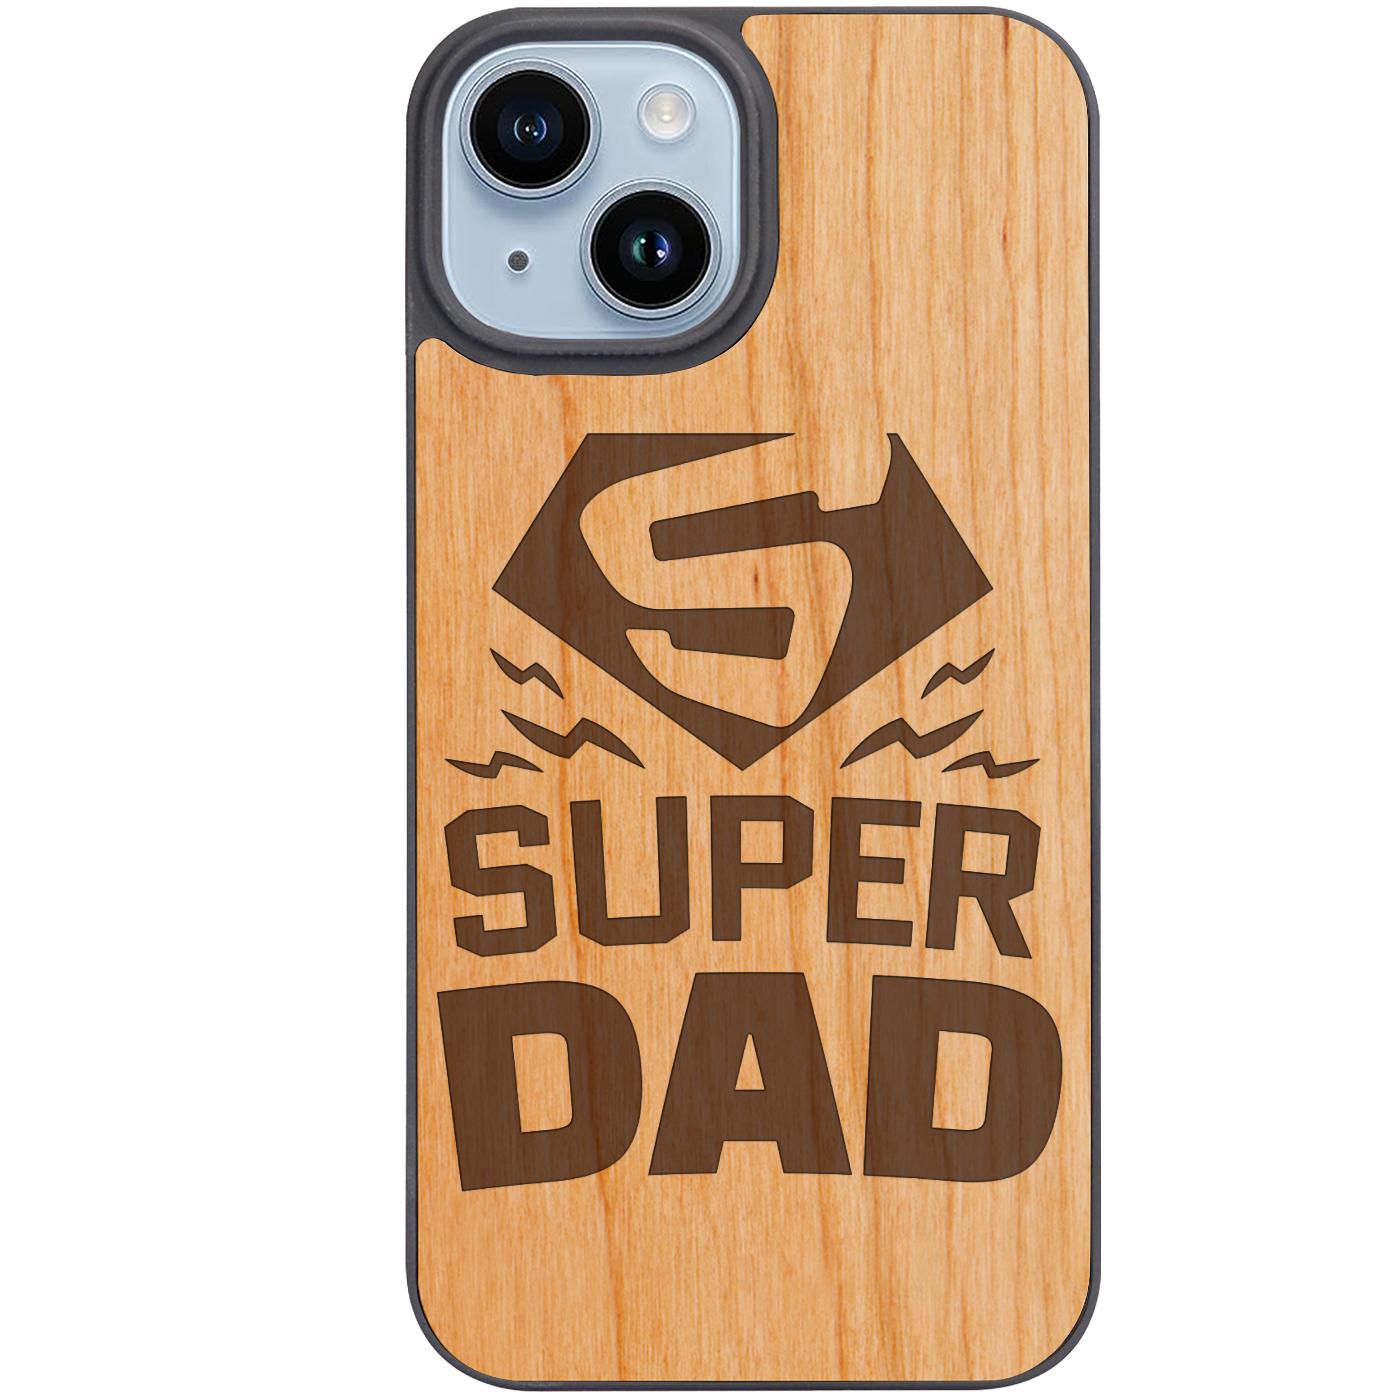 Super Dad - Engraved Phone Case